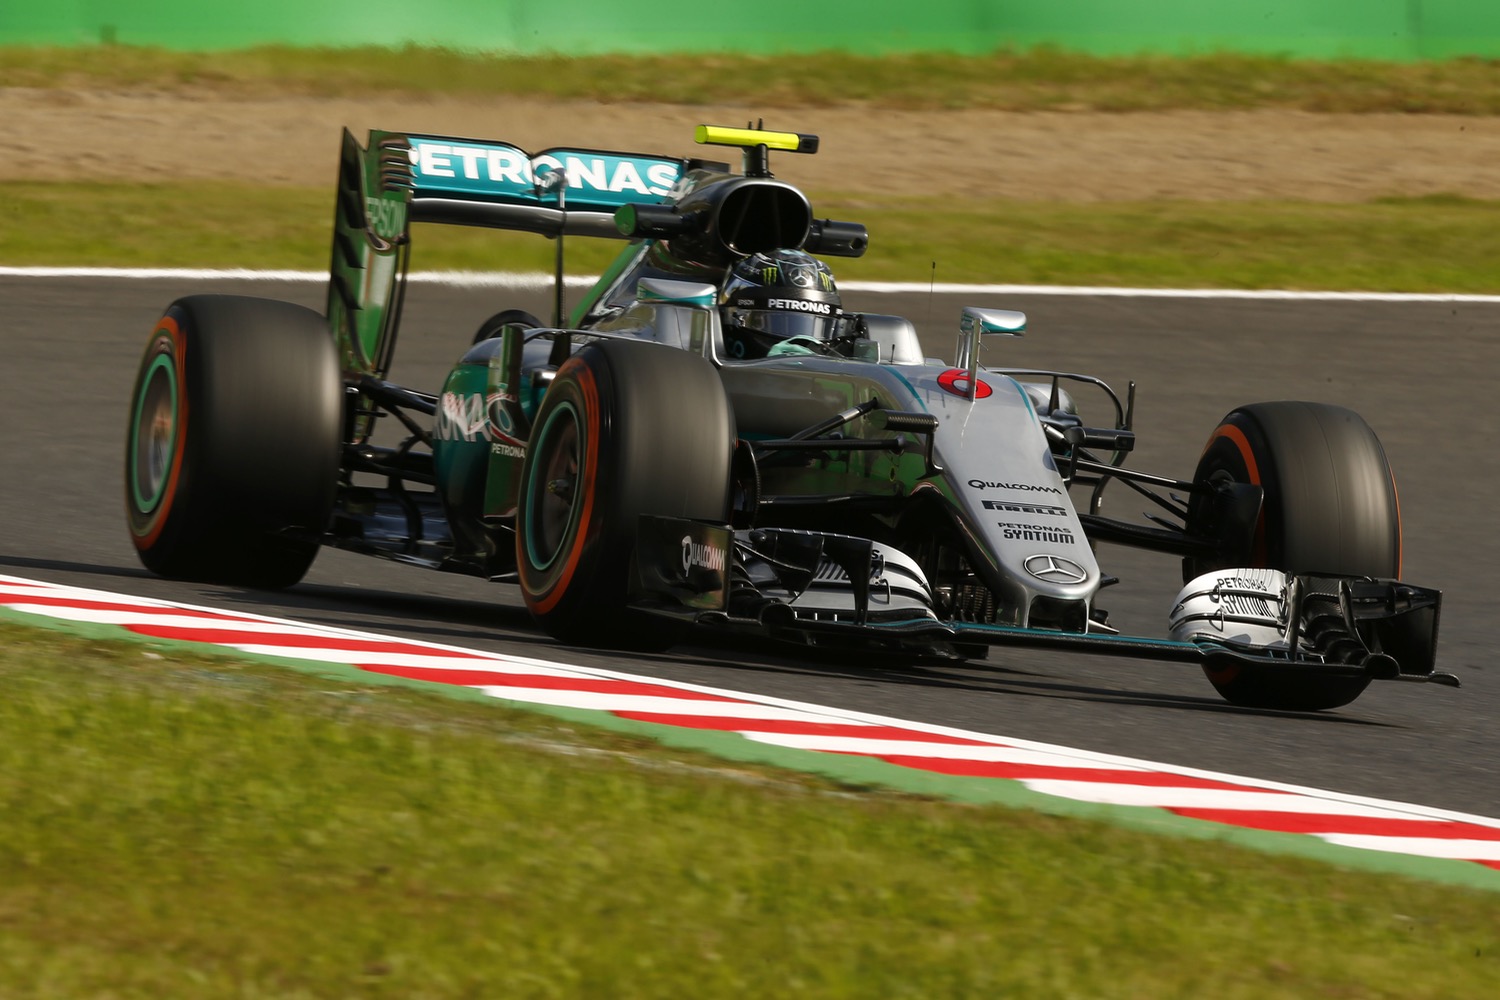 Mercedes-AMG F1 W07 Hybrid (Nico Rosberg, 2016 Japanese Grand Prix)